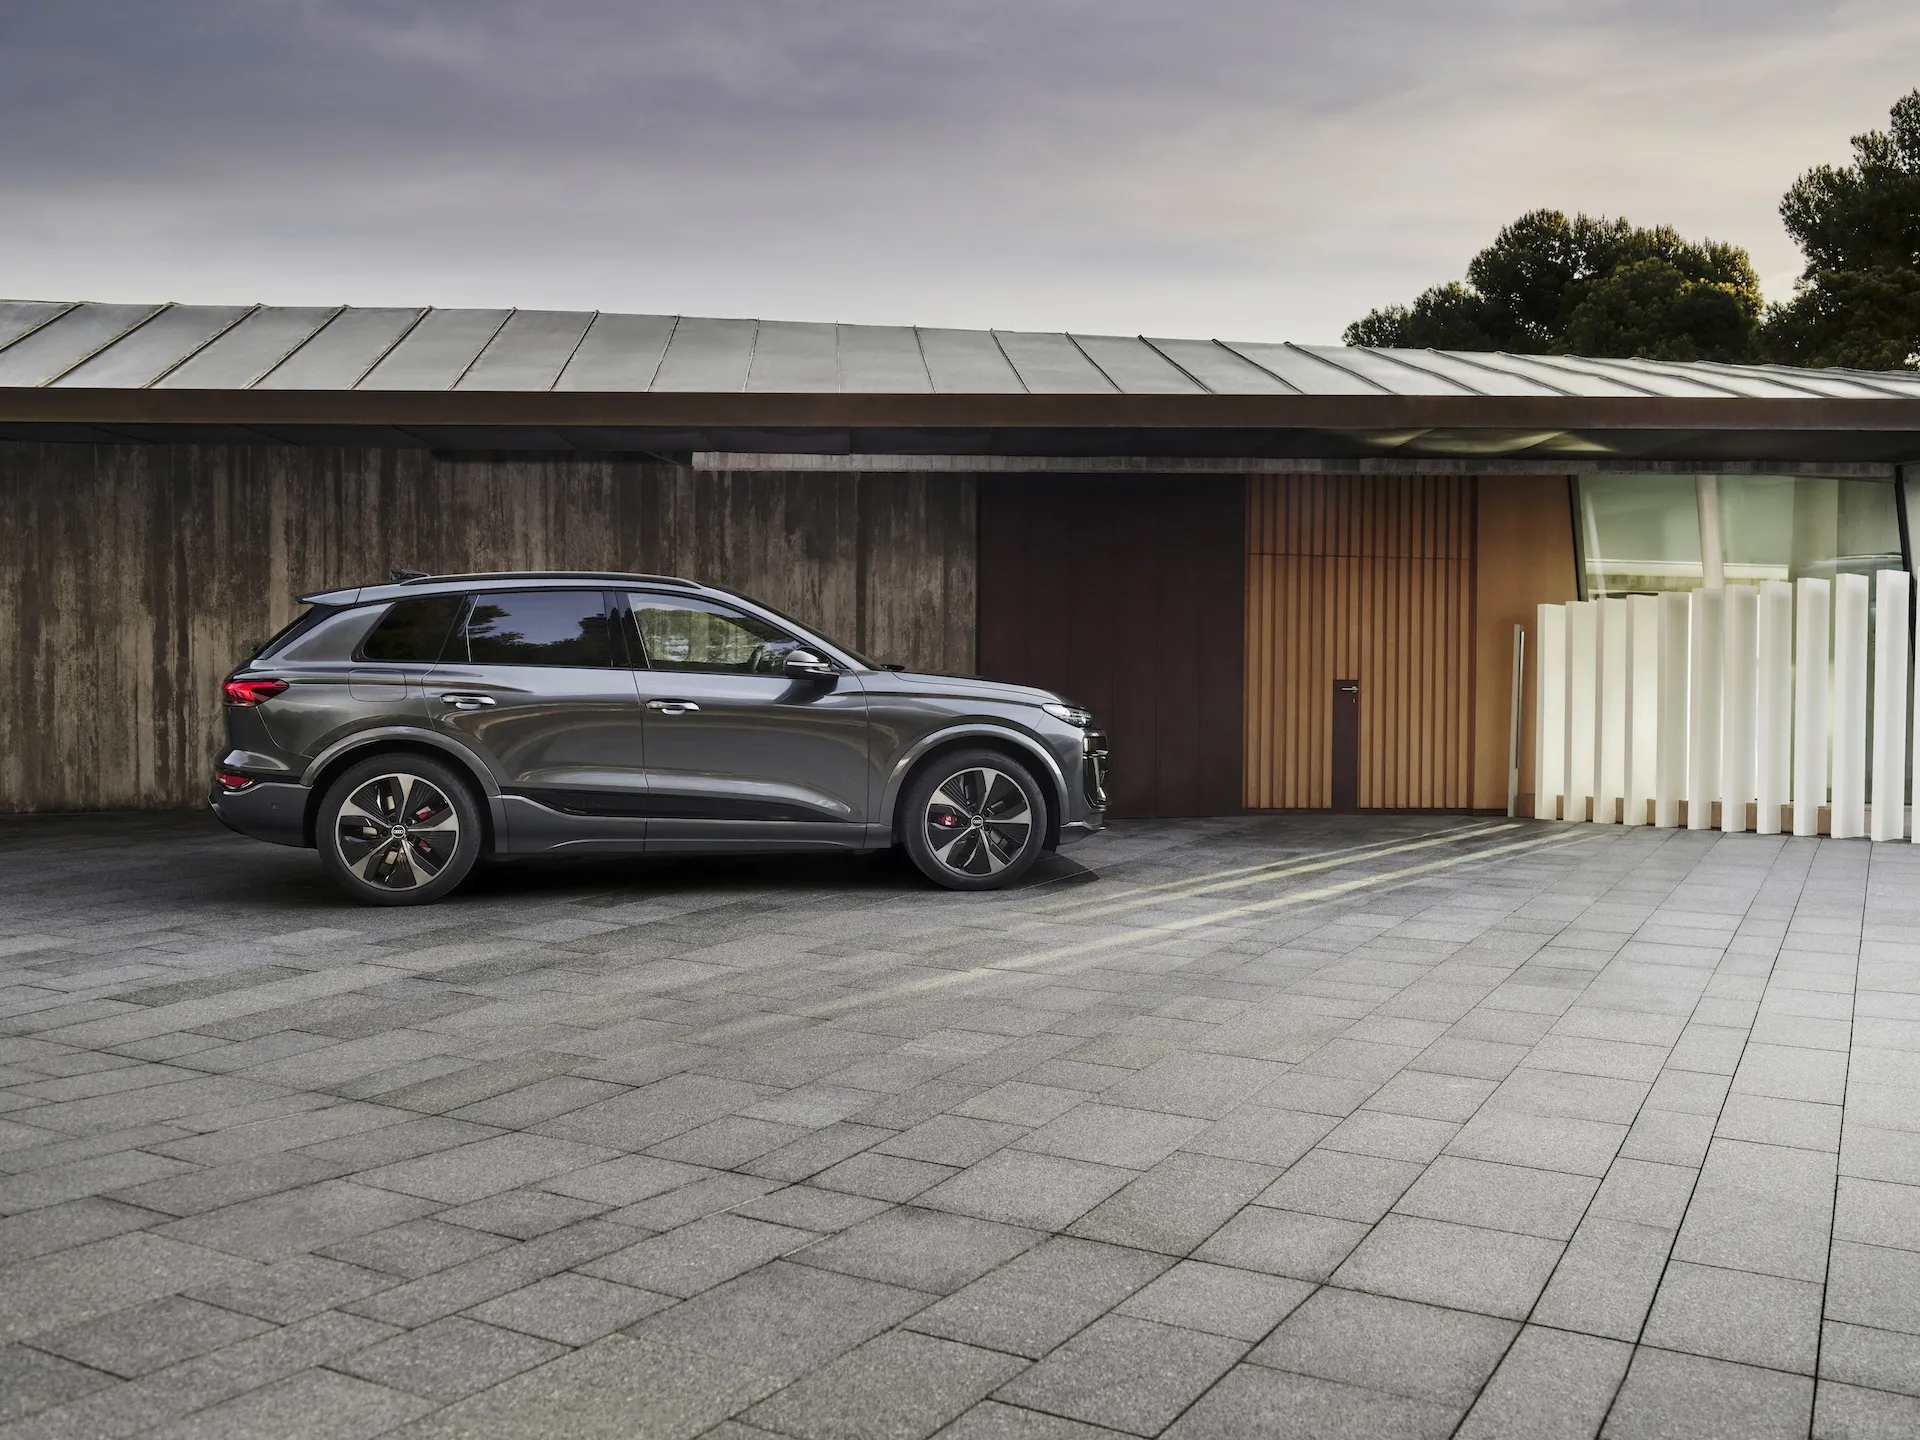 Audi Q6 E-Tron review, Fisker pause, Rivian Tesla adapter: Today’s Car News